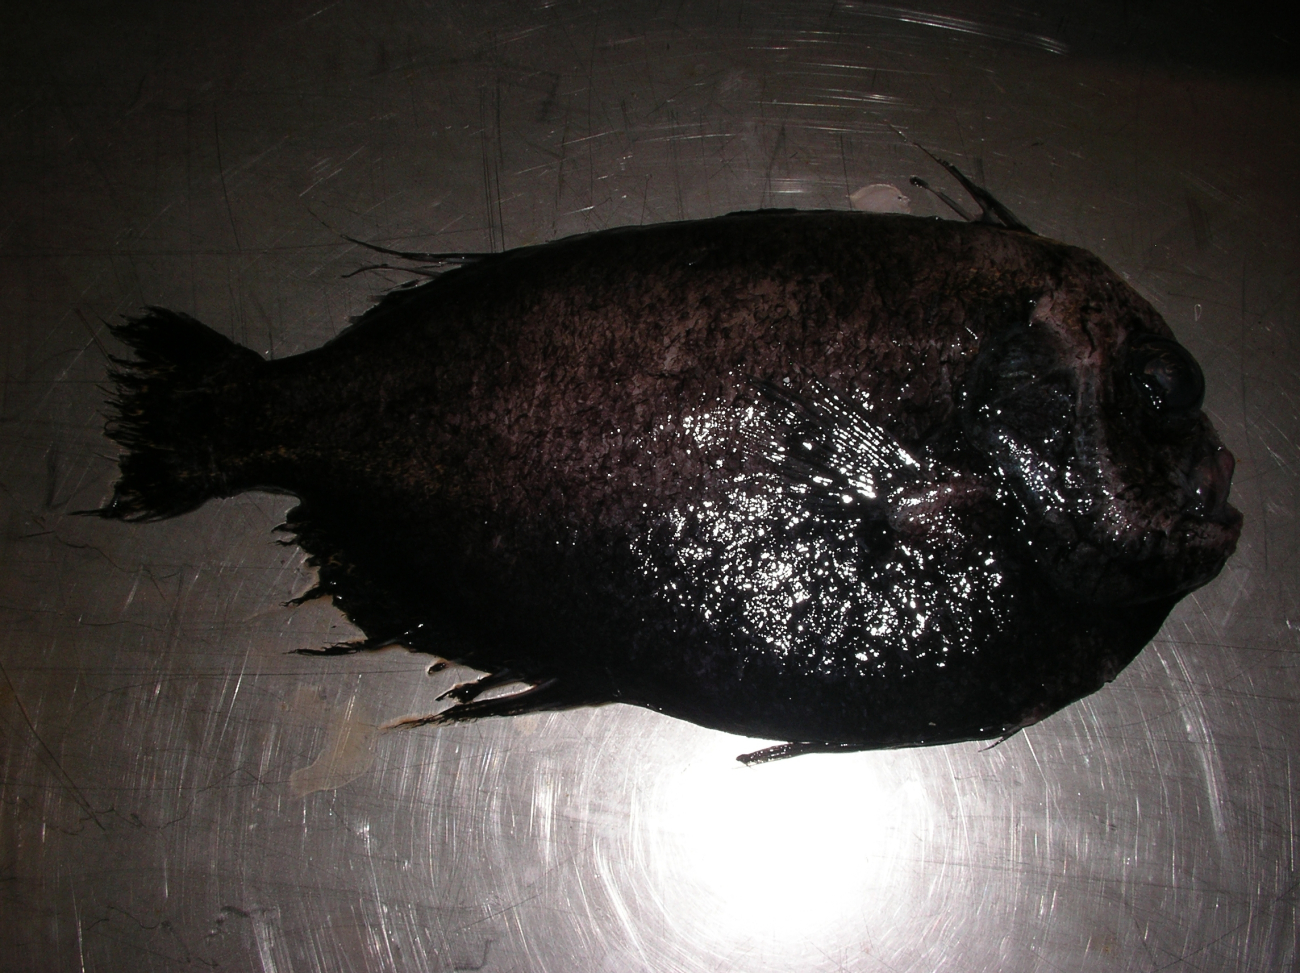 Unidentified deep sea fish